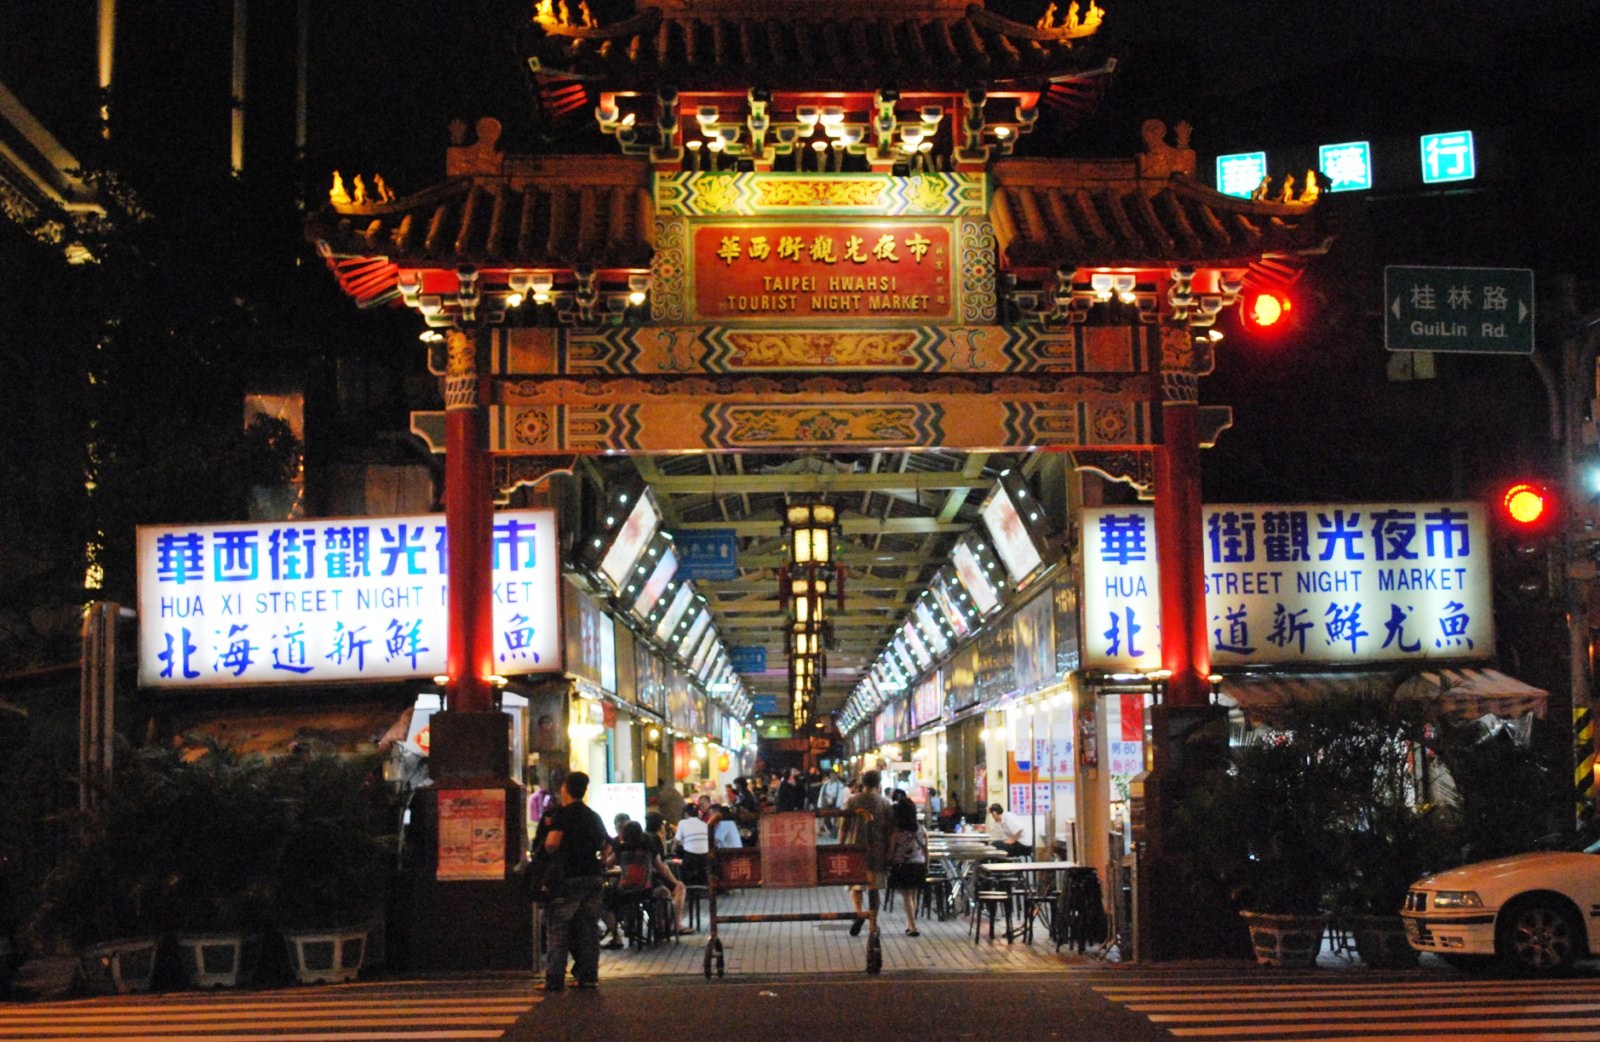 Taipei City: Hwahsi Tourist Night Market. WORLDS TO TREK